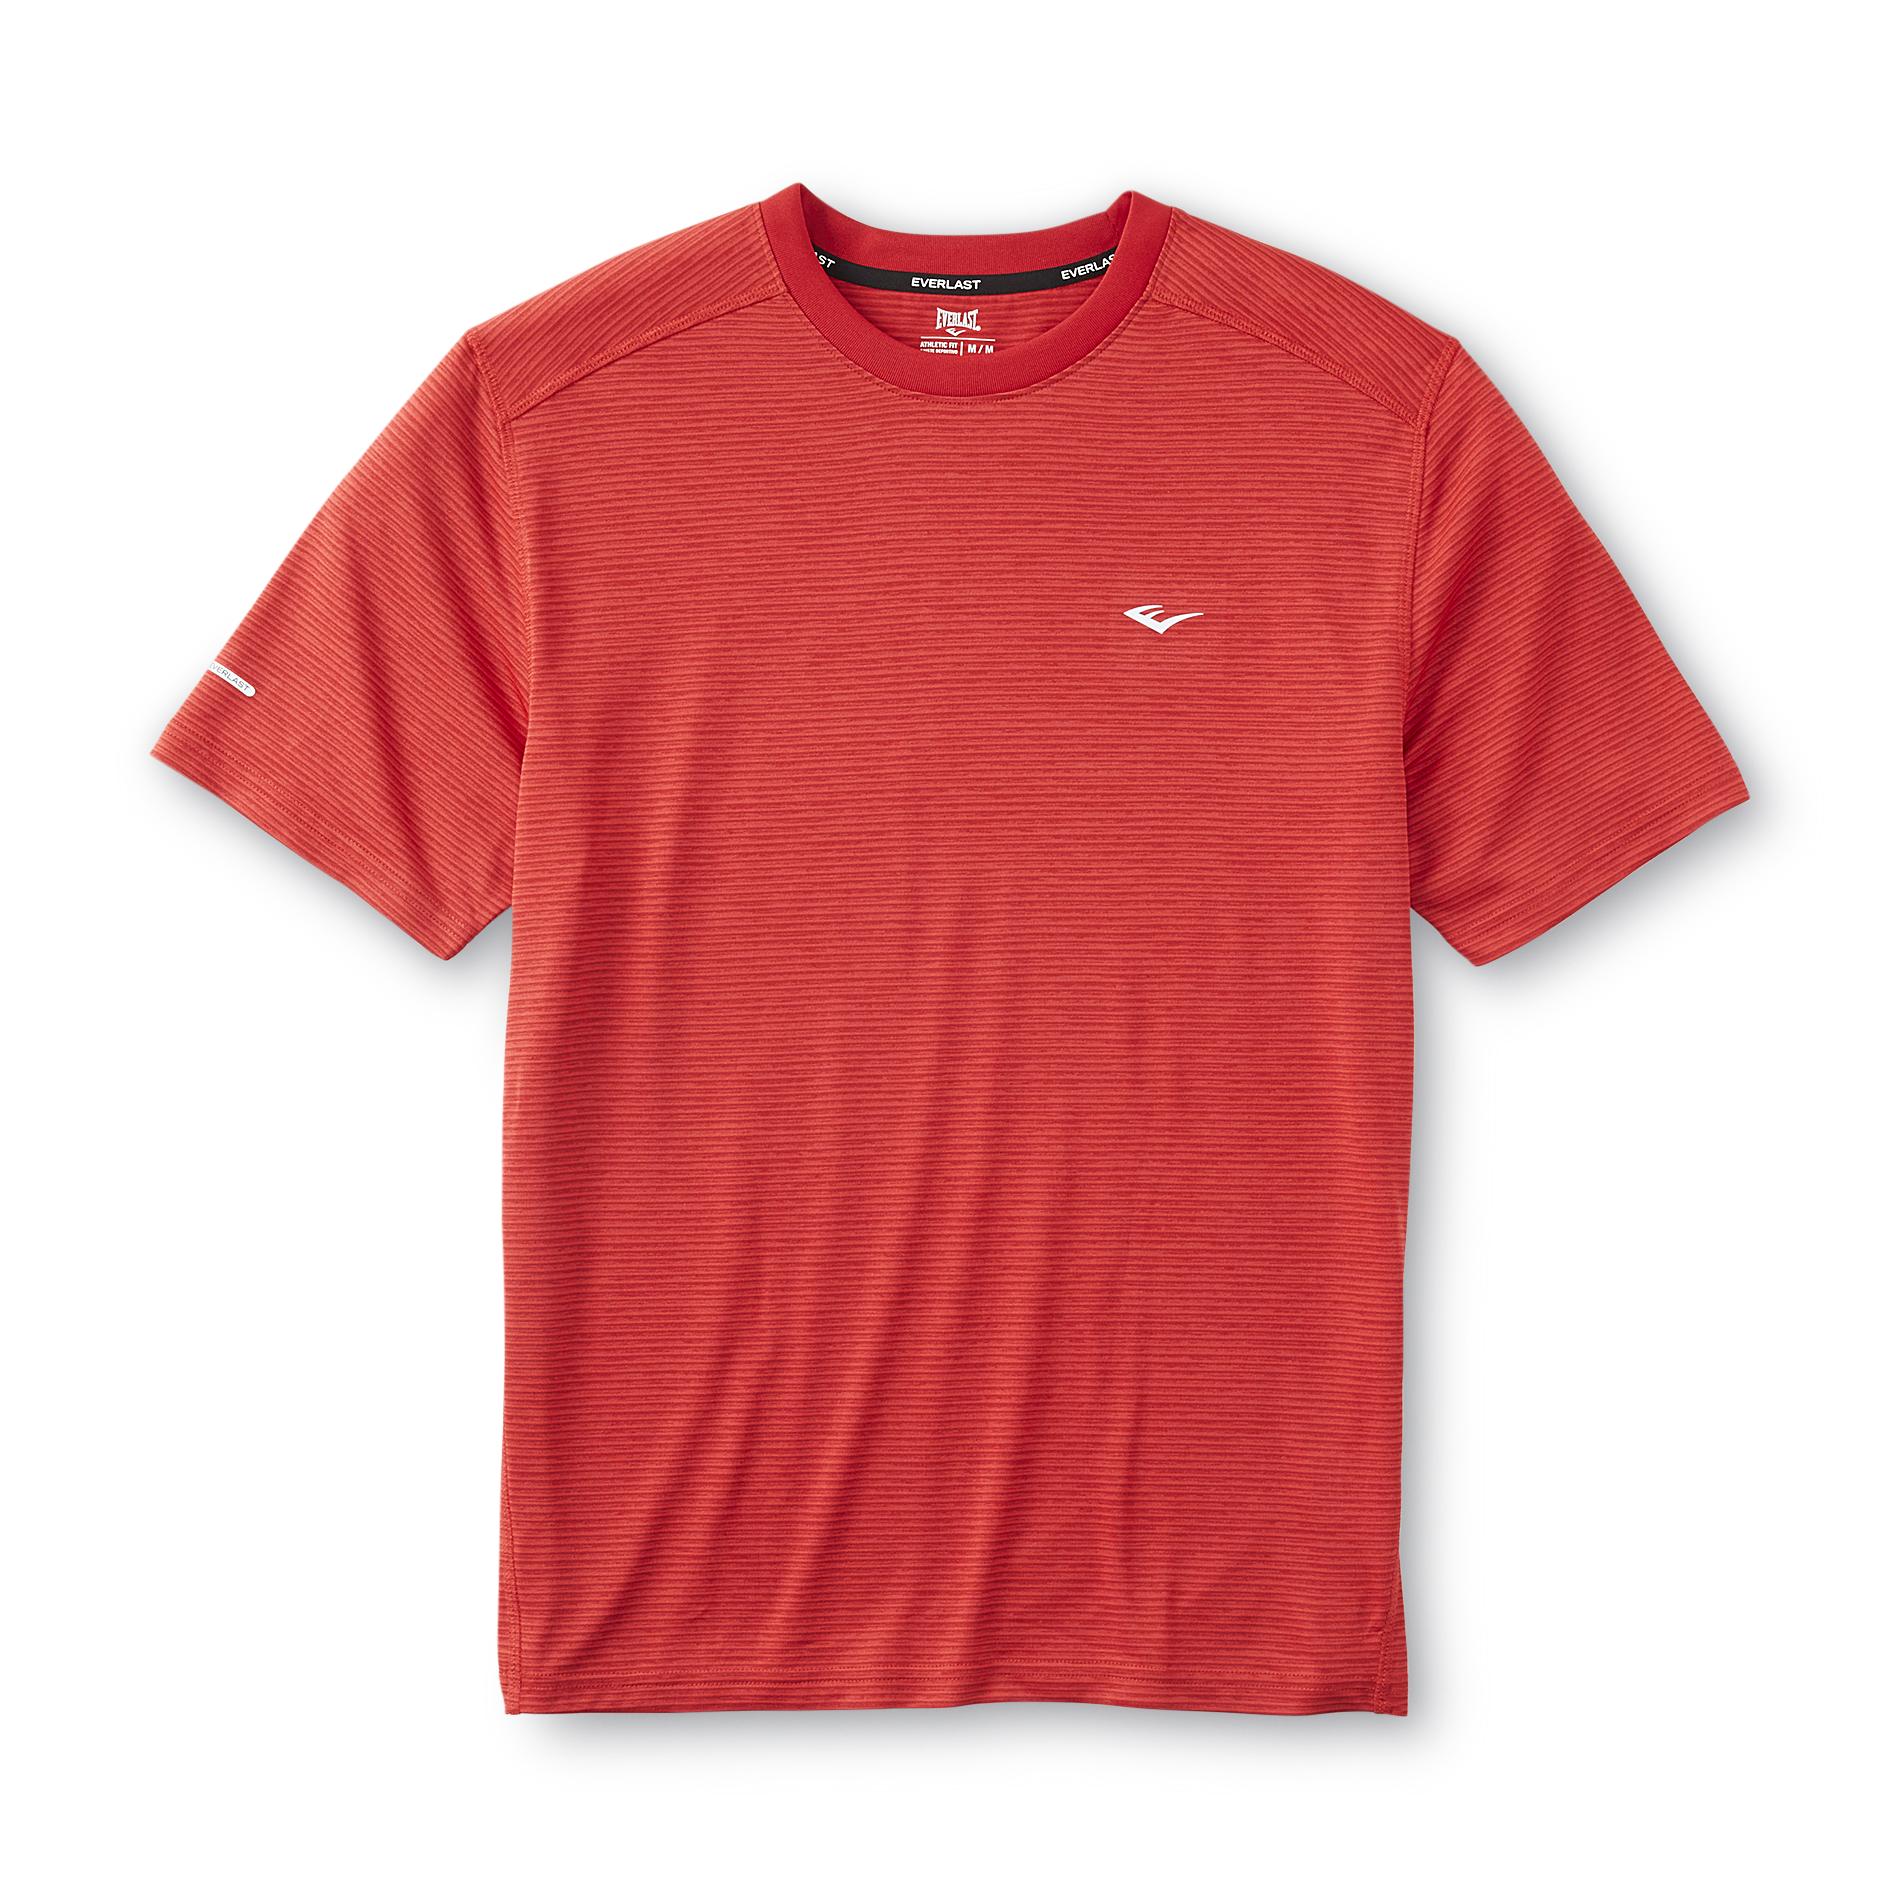 Everlast&reg; Men's Athletic T-Shirt - Striped